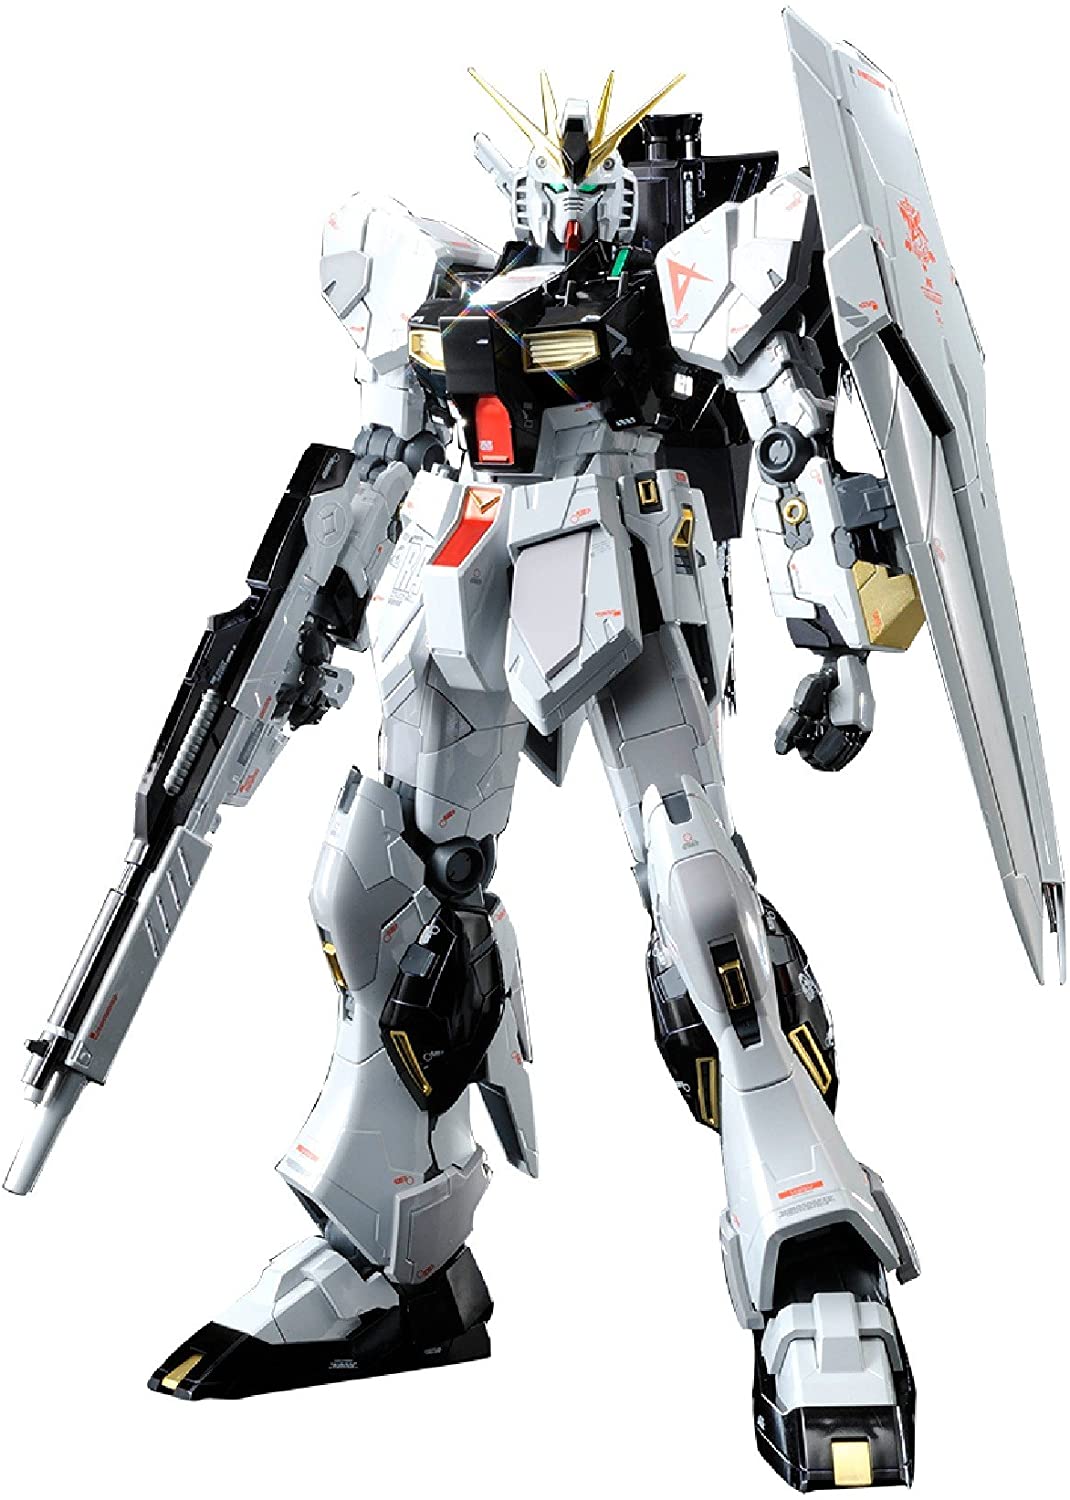 MG - RX-93 Nu Gundam Ver.Ka (Titanium Finish)